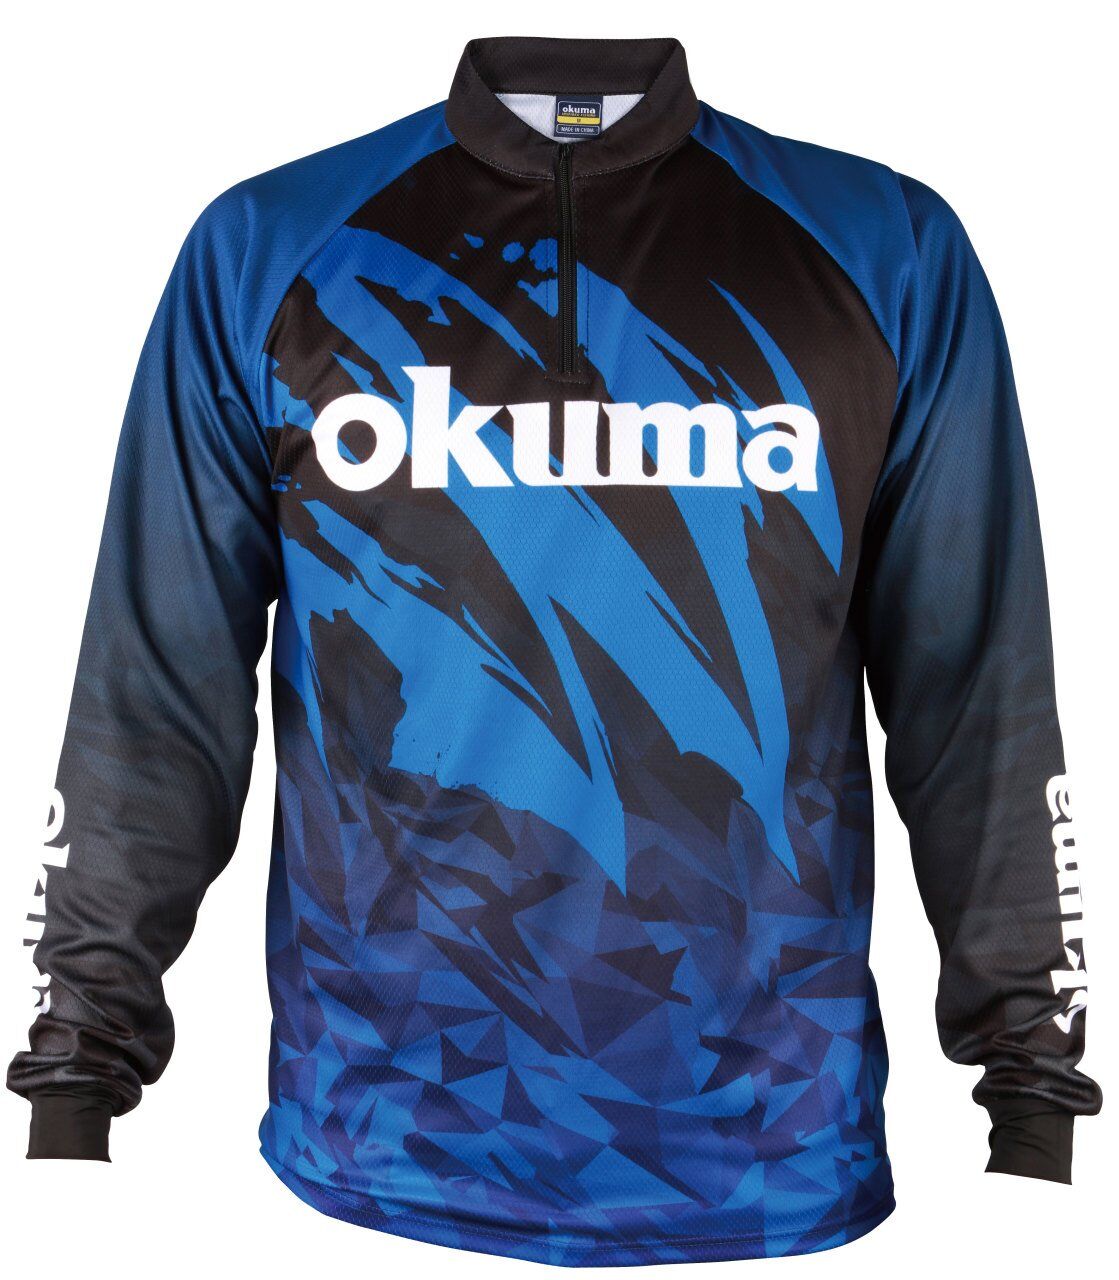 Okuma Motif Tournament jersey M